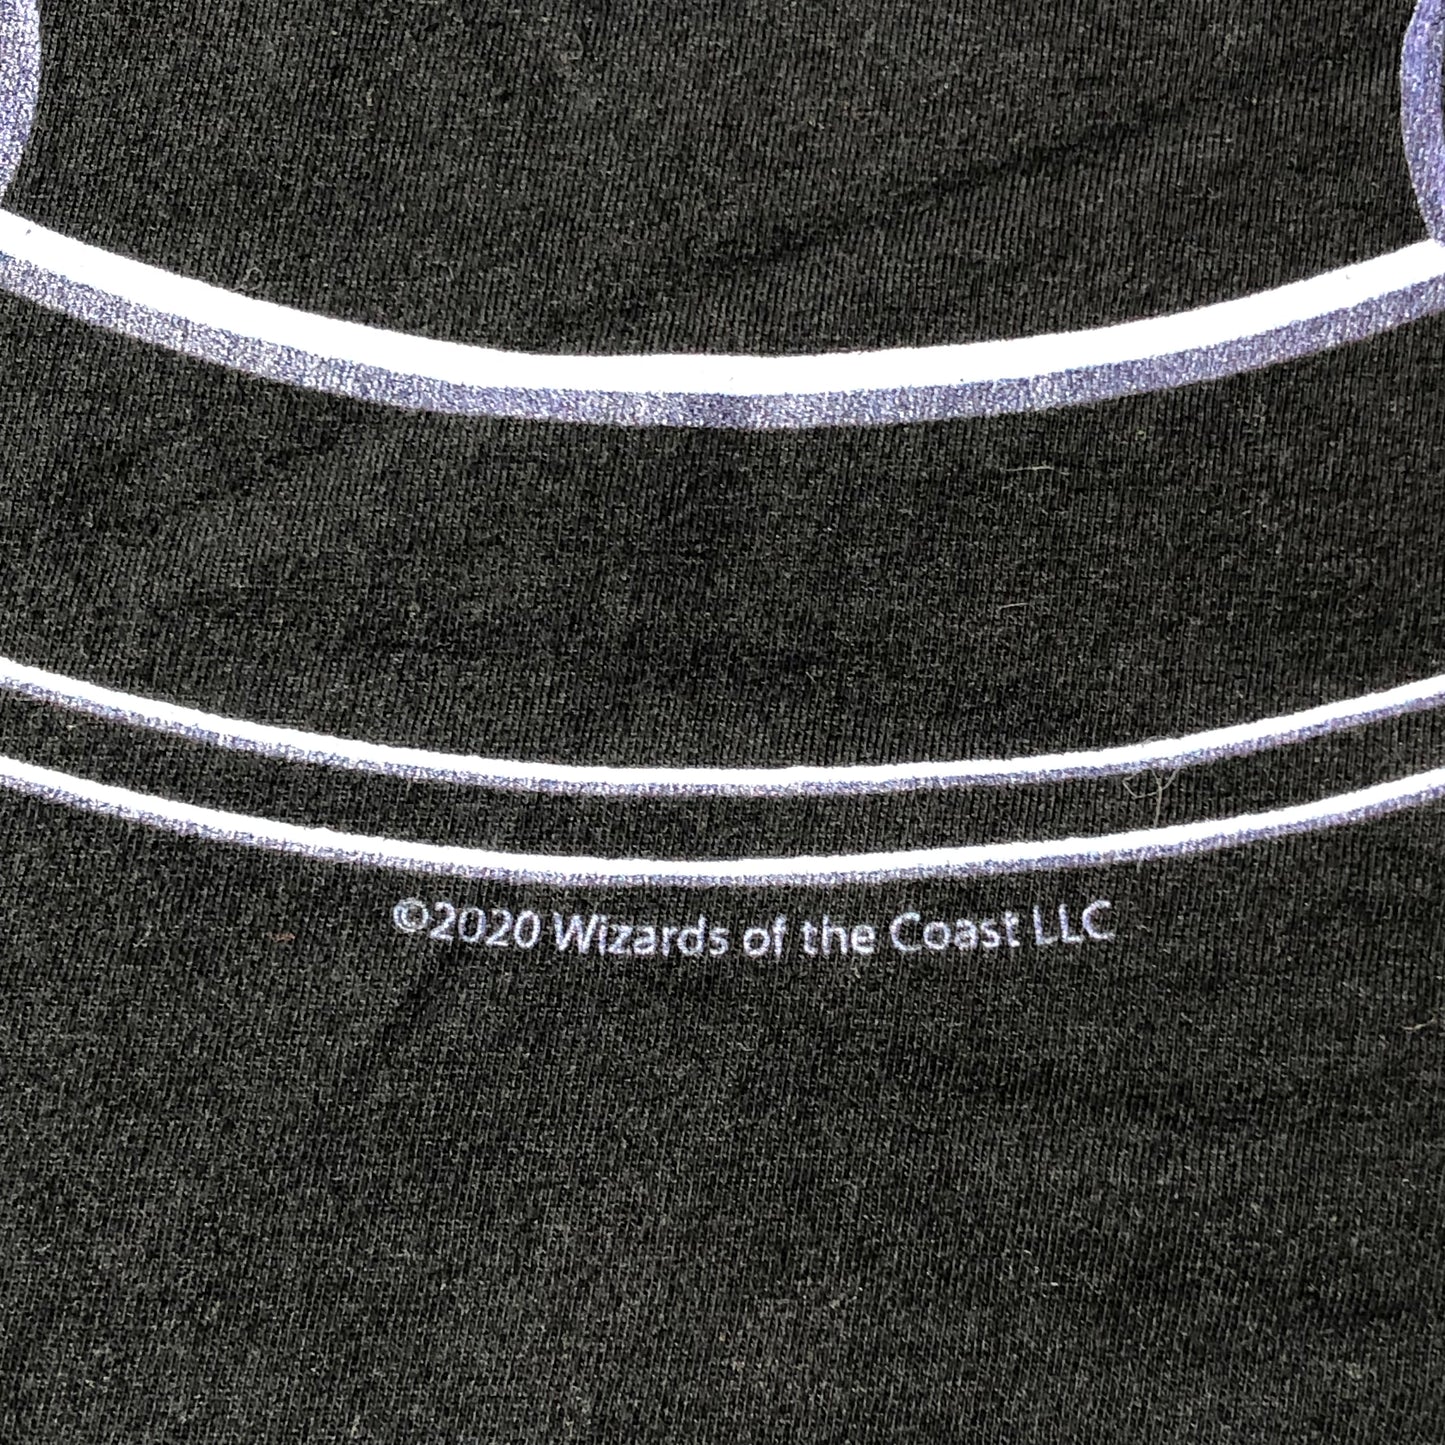 MTG Magic The Gathering T-shirt Size XL Black Wizards Of The Coast 2020